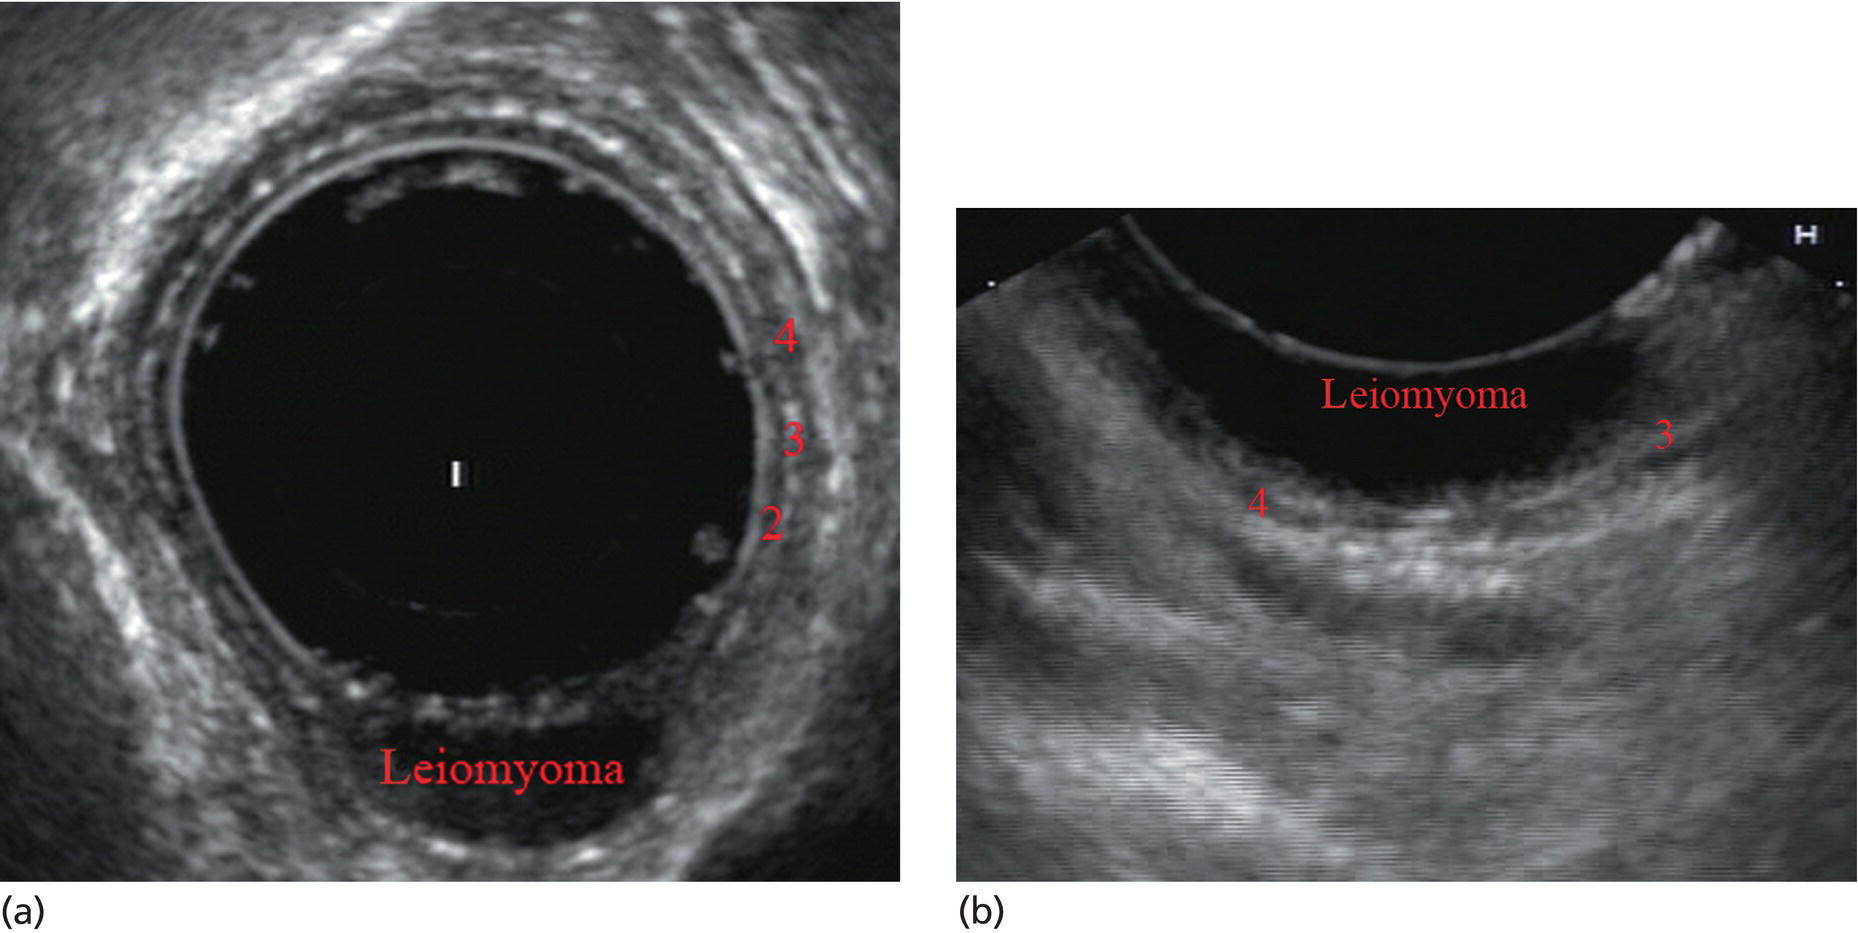 PhotoS depict (a) Radial array image of esophageal wall with small echolayer II leiomyoma. (b) Linear array image of esophageal wall with small echolayer II leiomyoma.